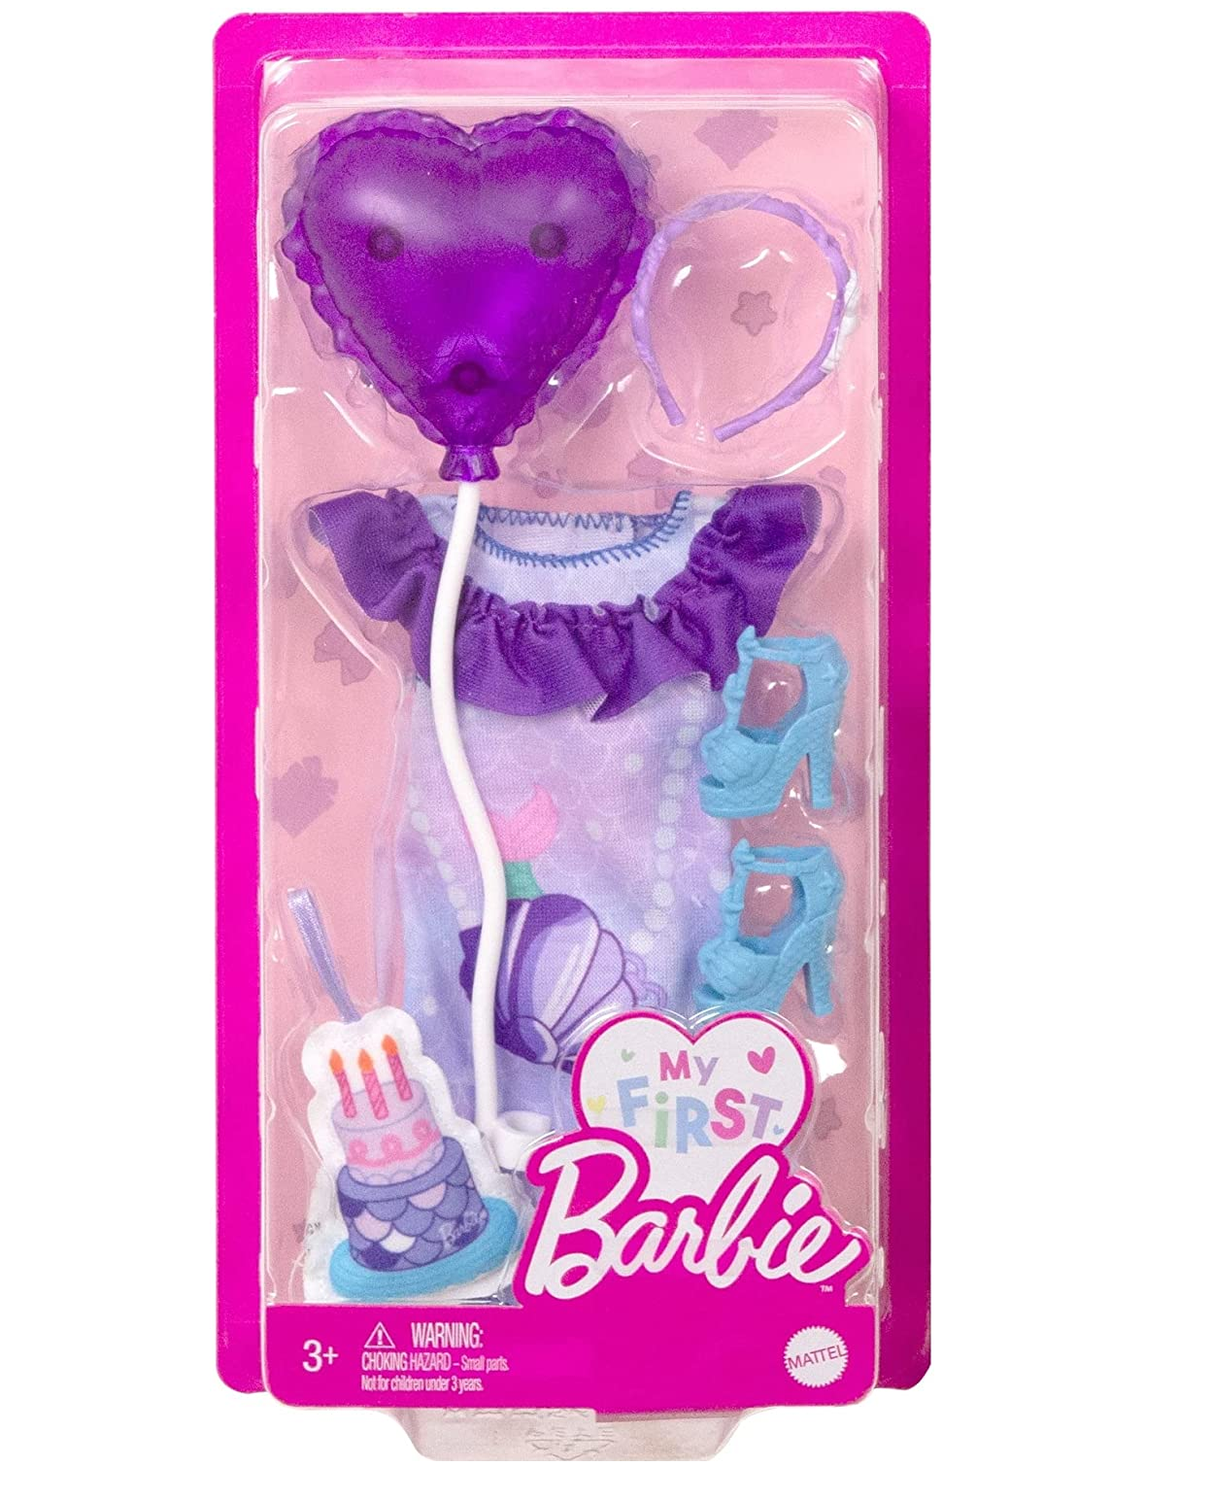 Roupa Boneca Barbie Kit Com 52 Acessórios